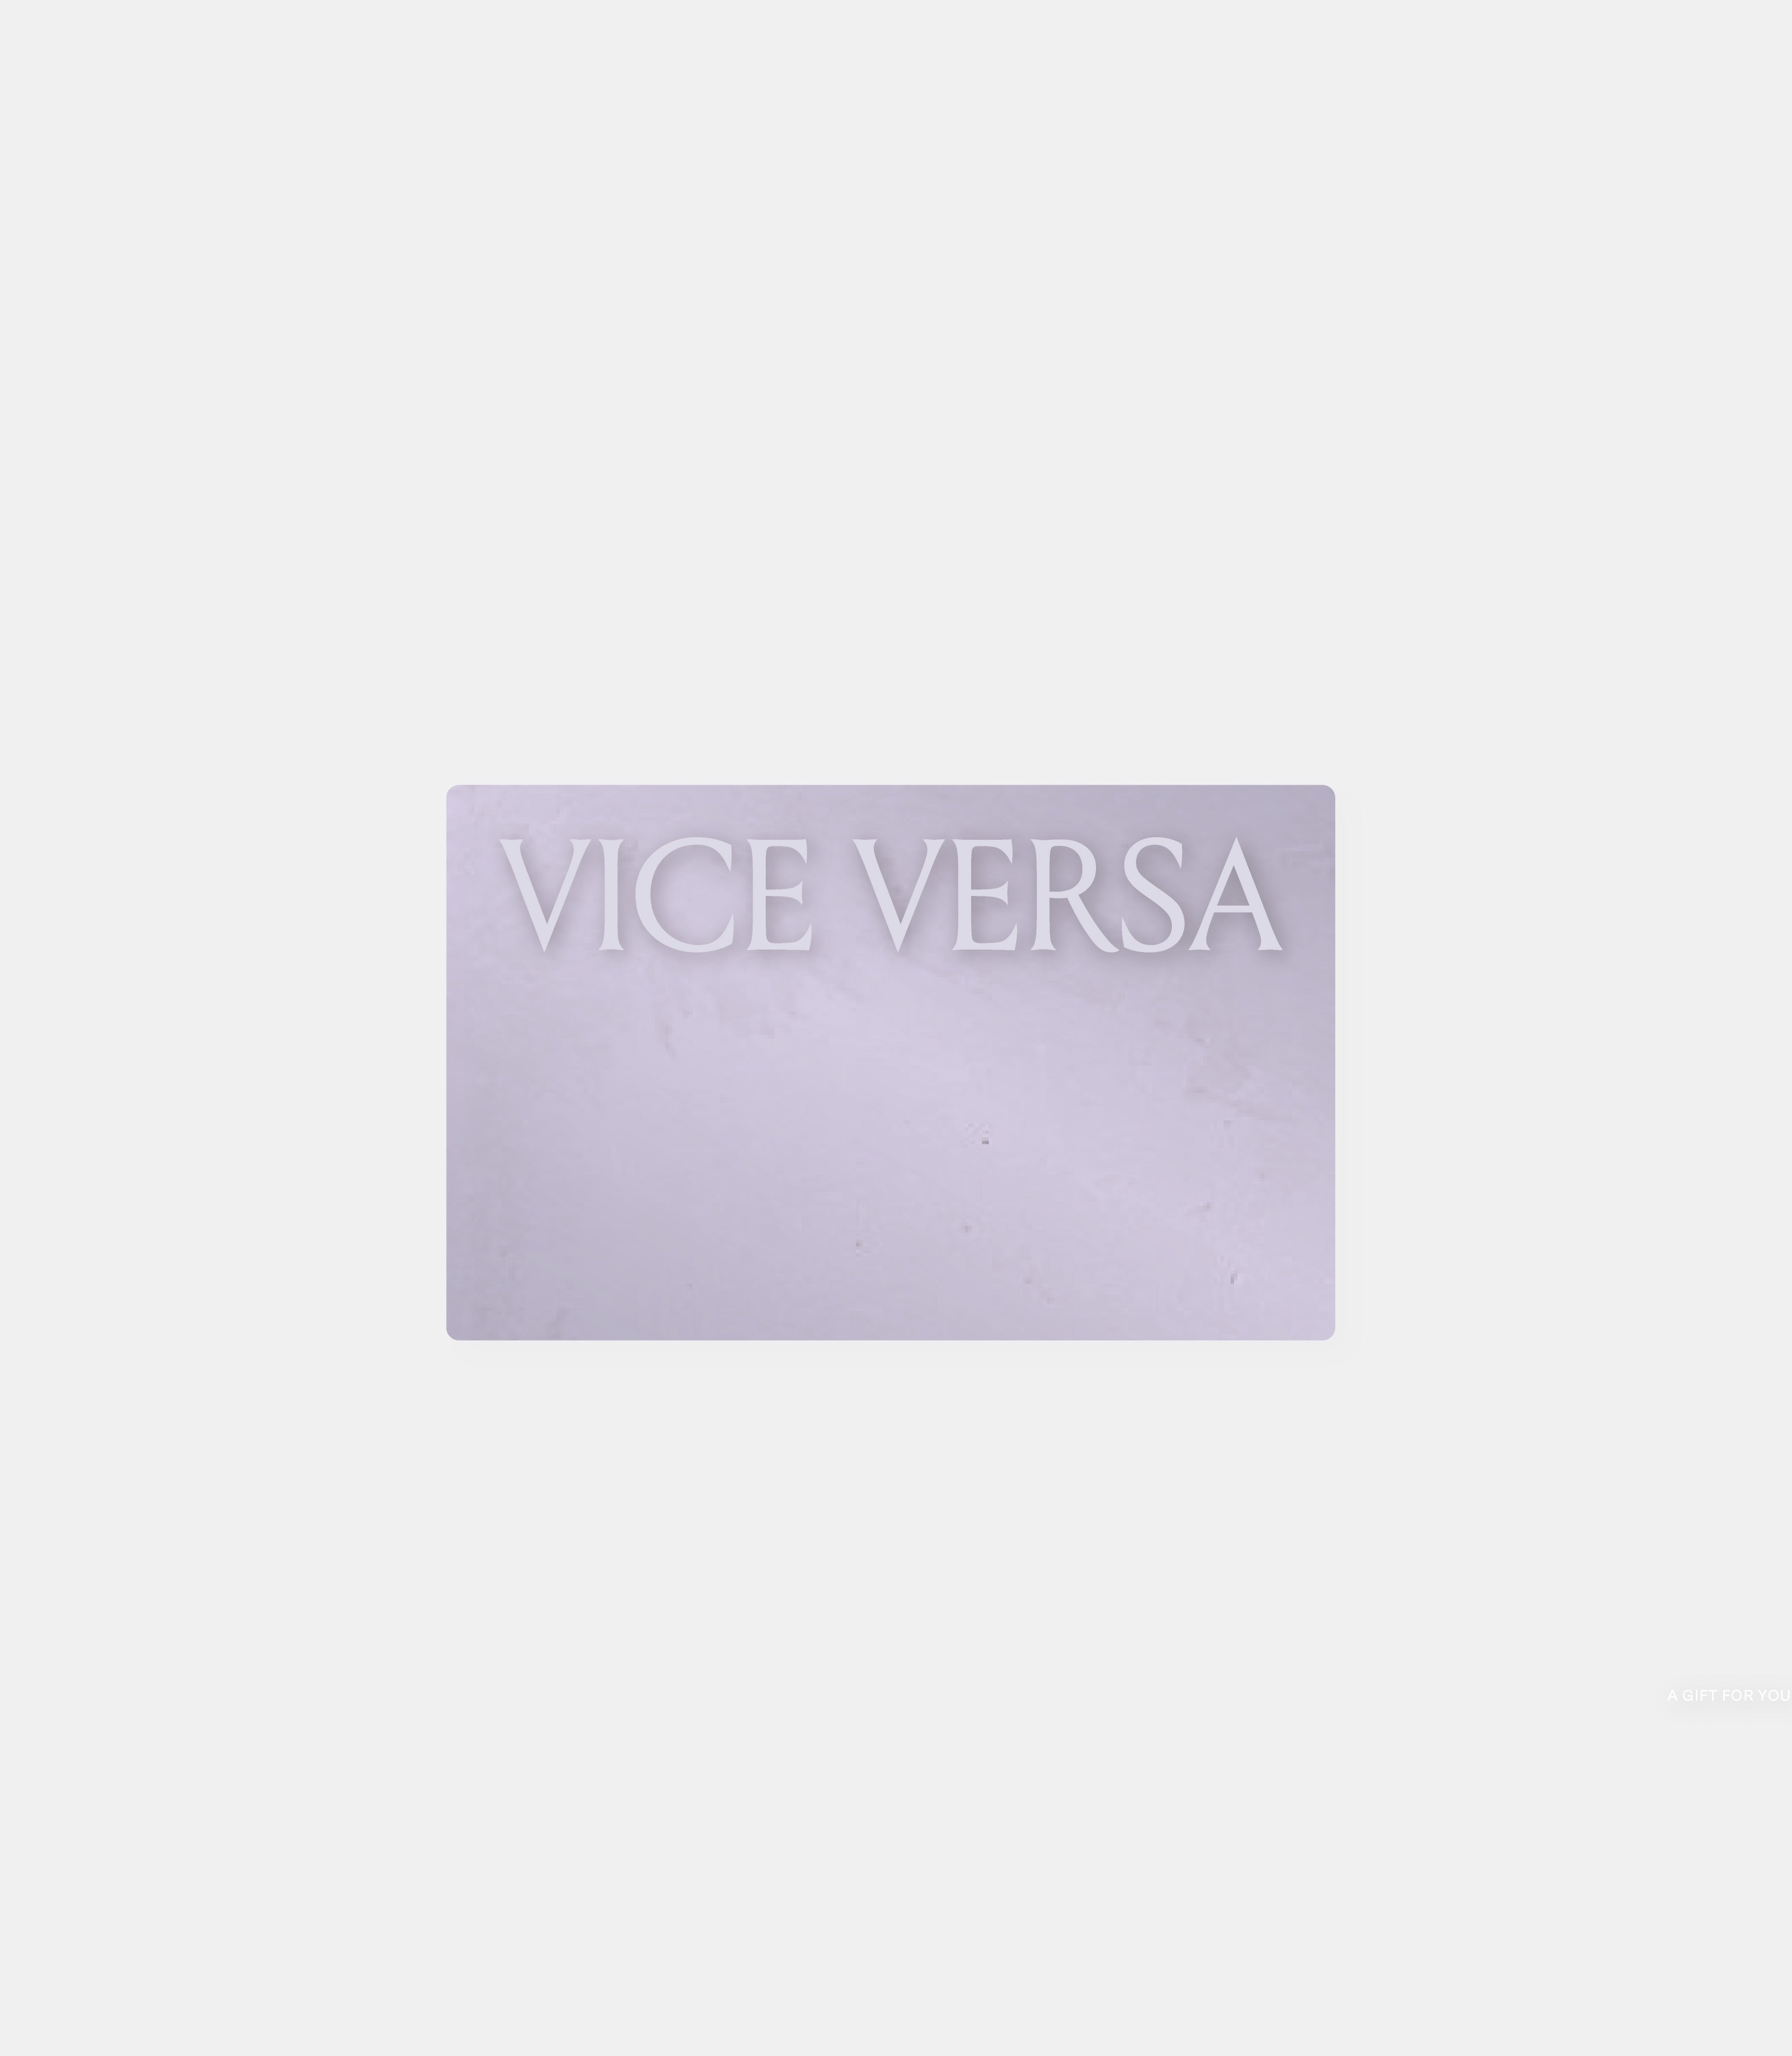 VICE VERSA gift card